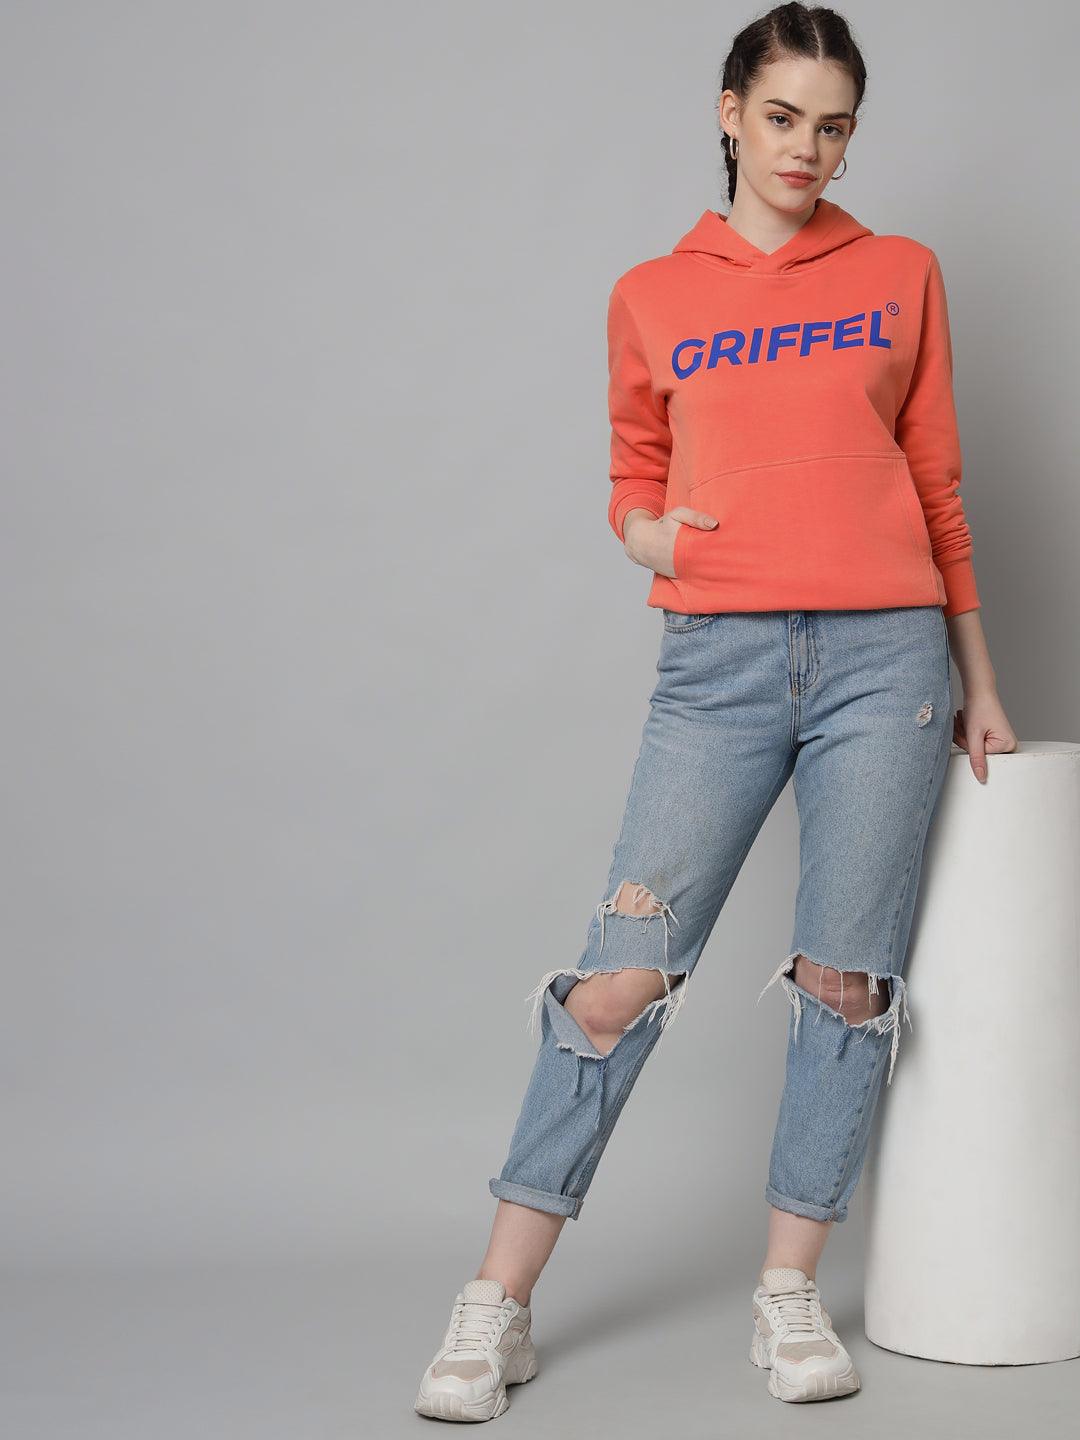 Griffel Women’s Cotton Fleece Full Sleeve Hoodie Peach Printed Sweatshirt - griffel